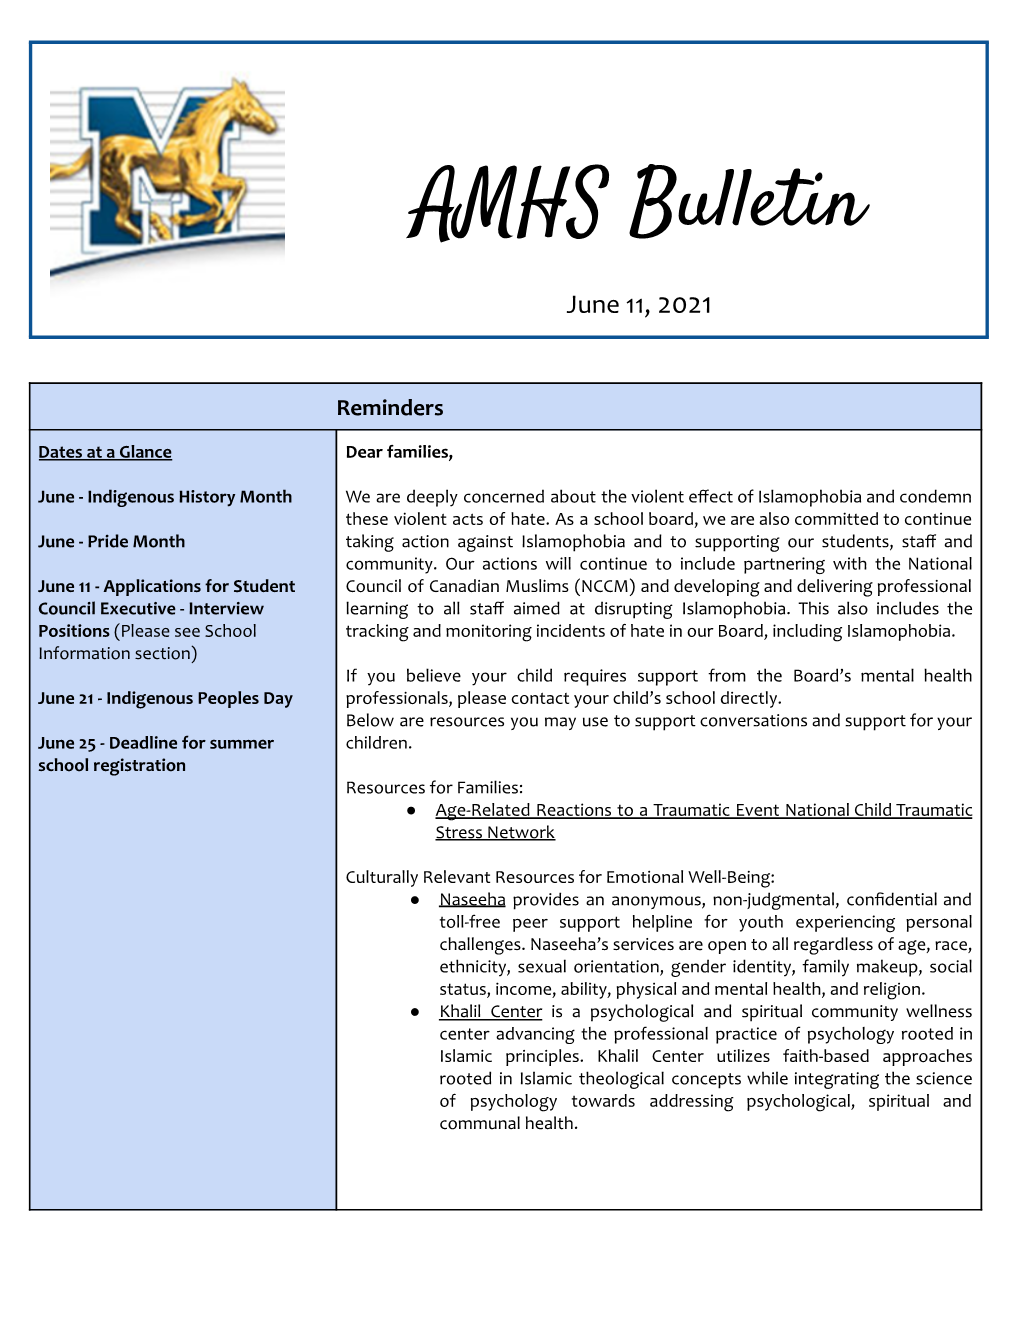 AMHS Bulletin June 11, 2021